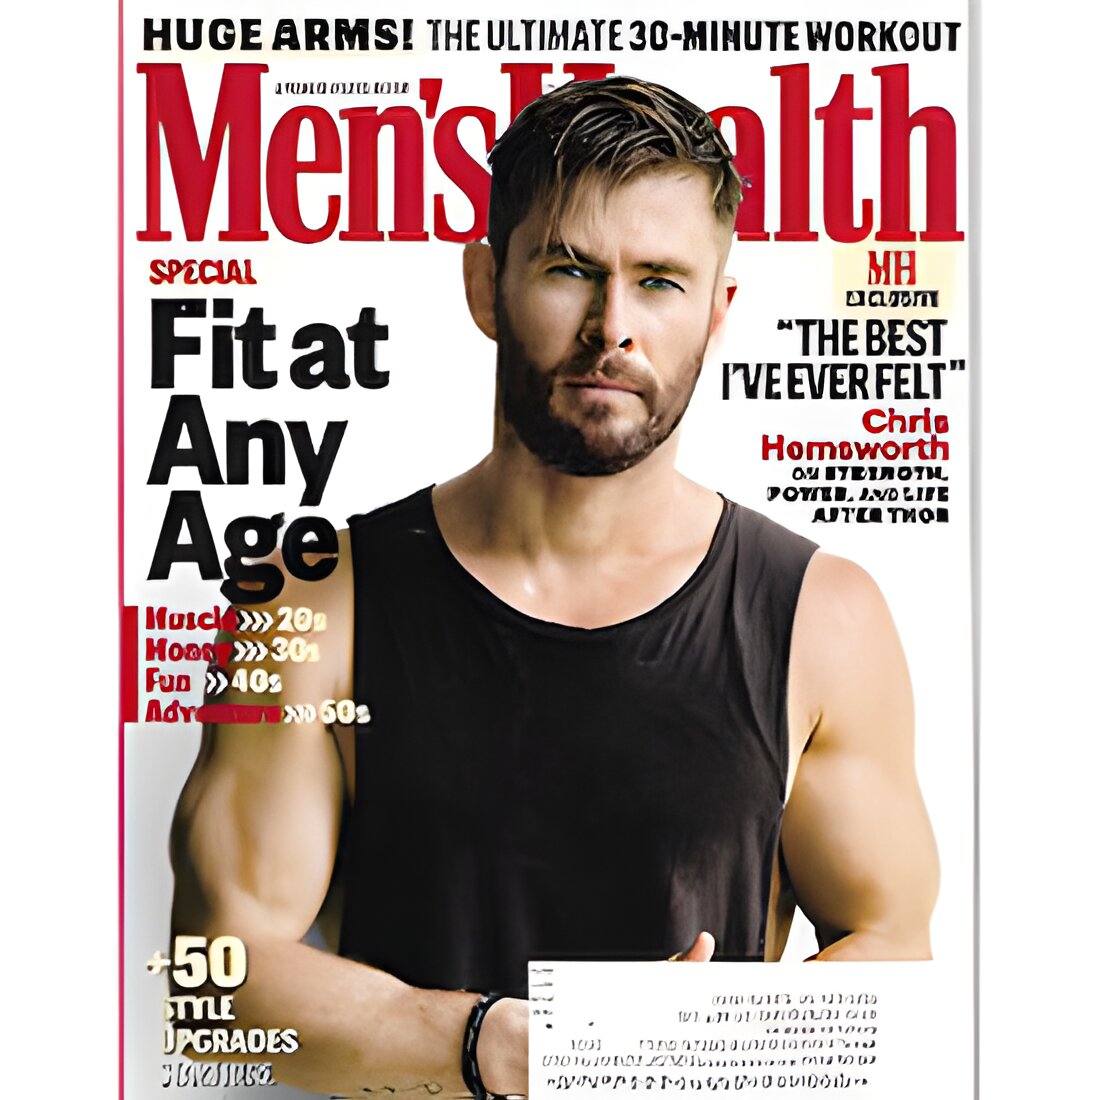 Free Subscription To Men's Health Magazine